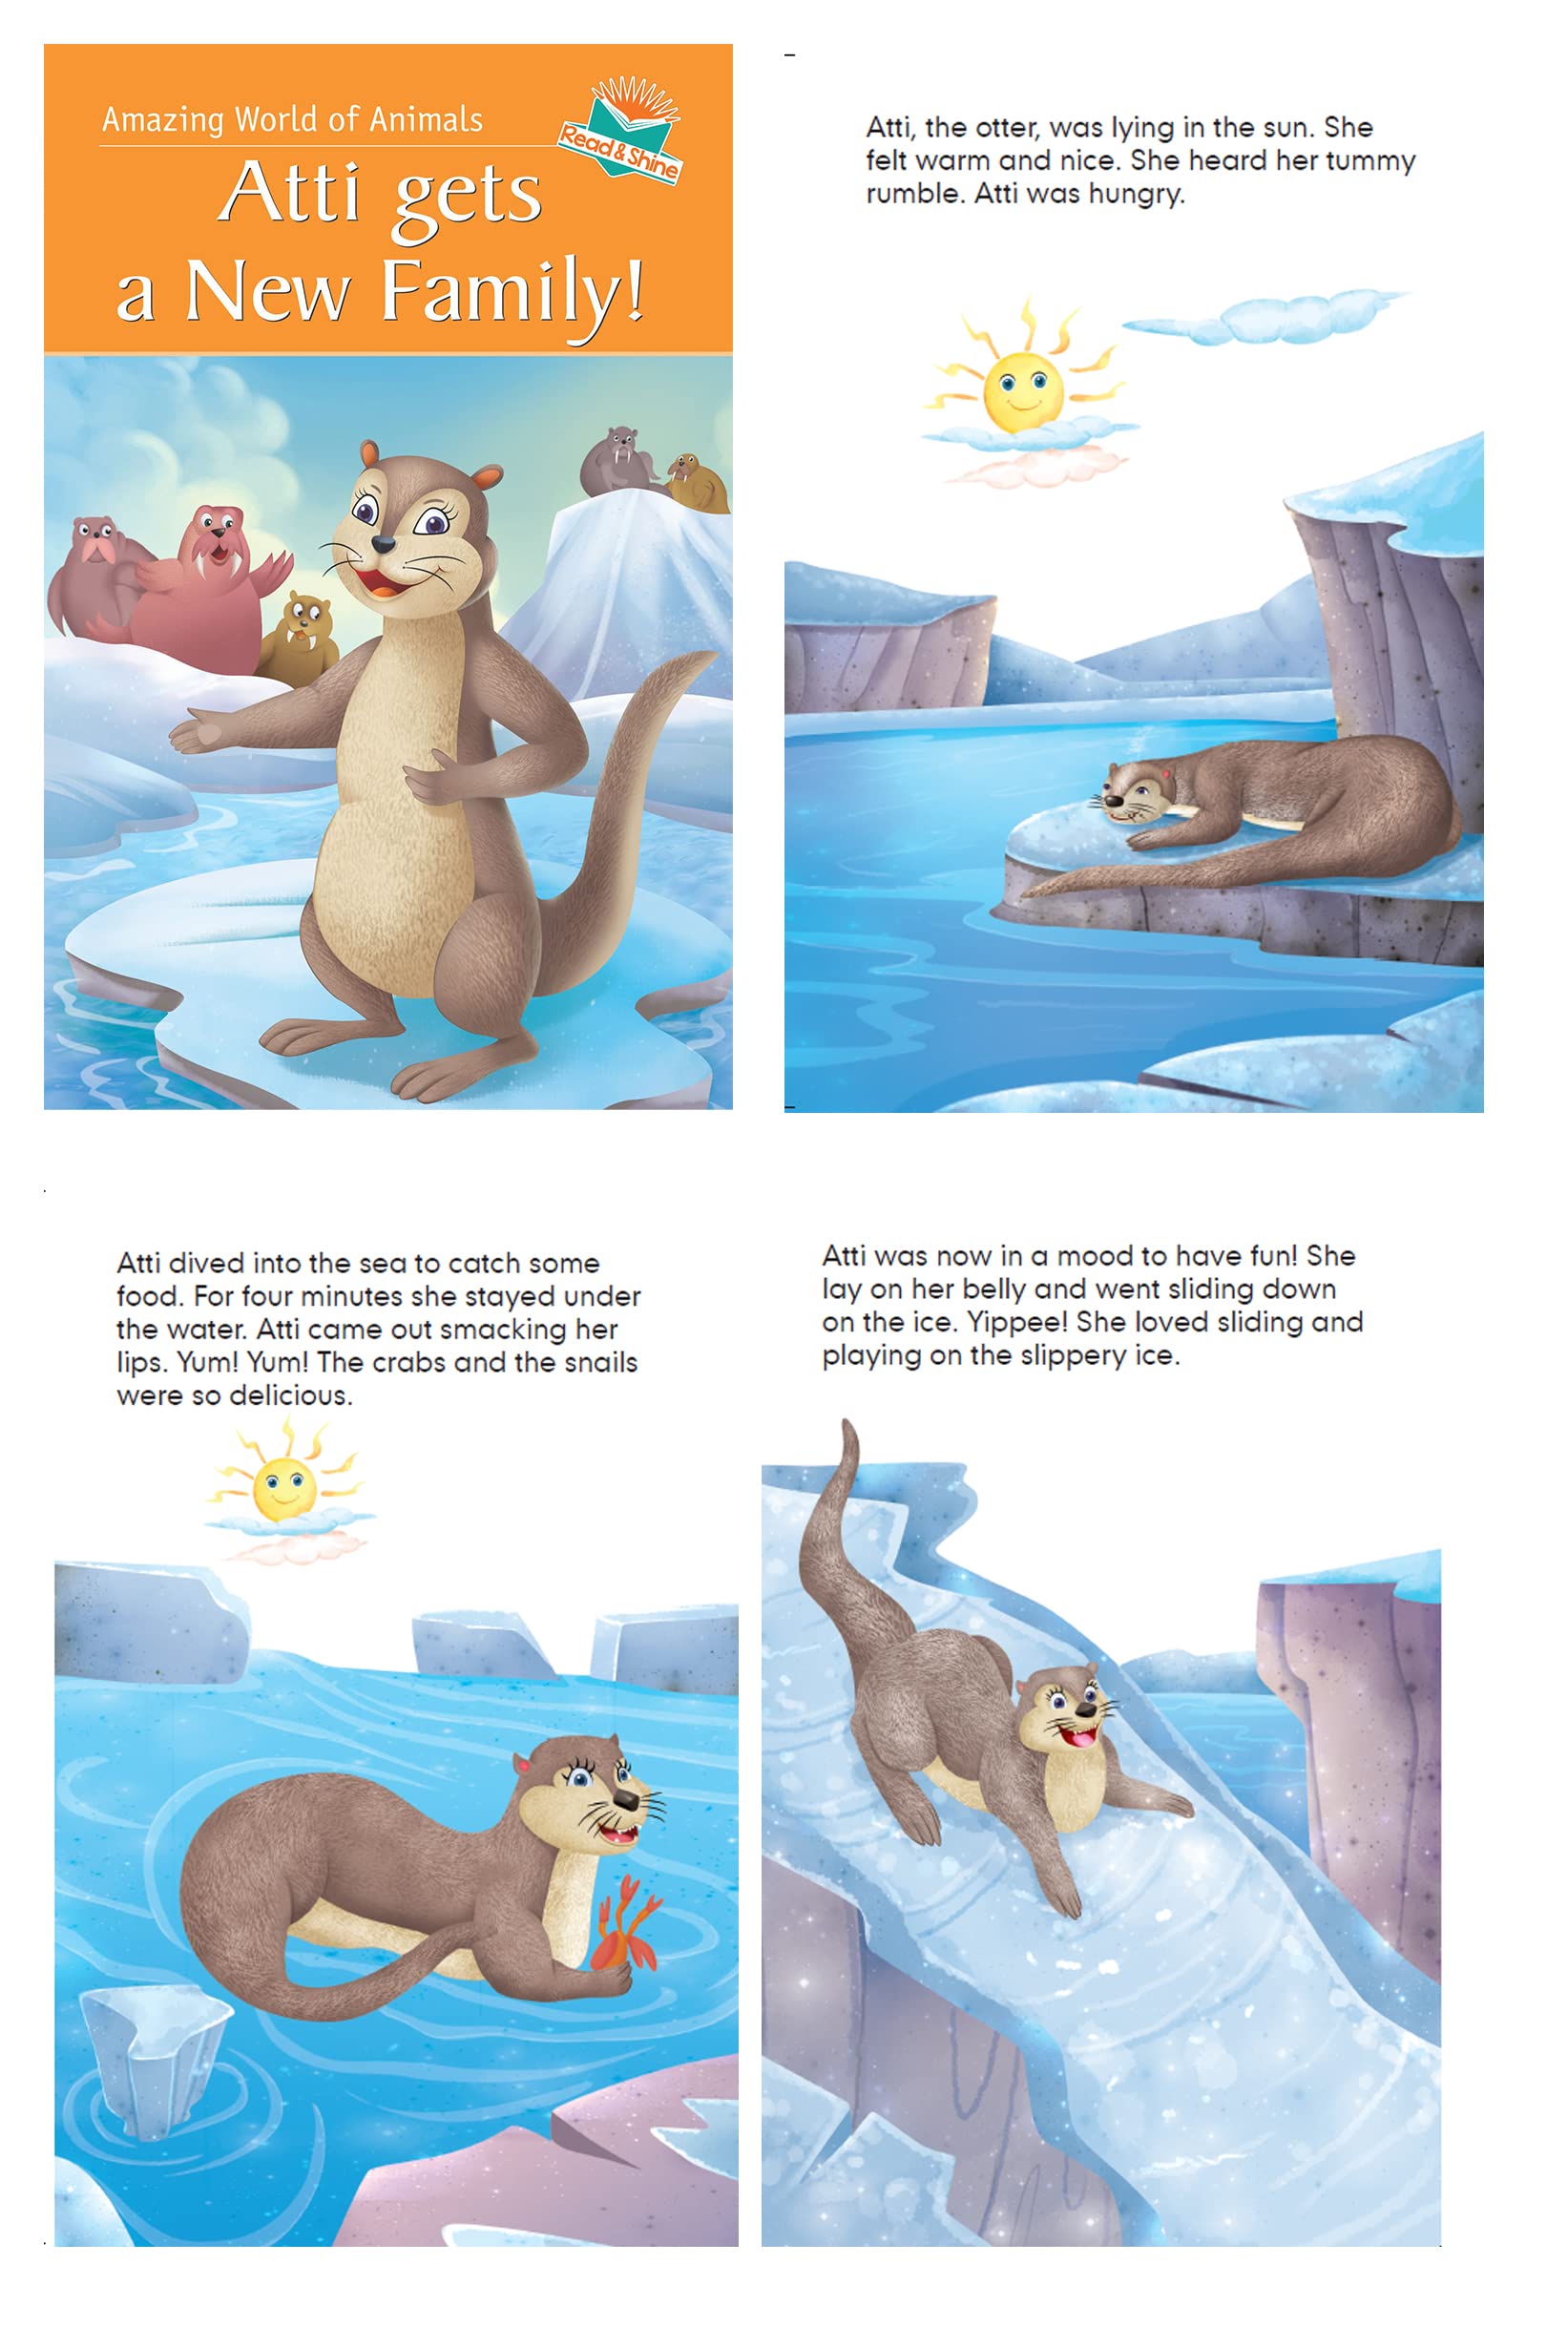 Pegasus Self Reading Amazing Animal Story Books Set of 8 for Children